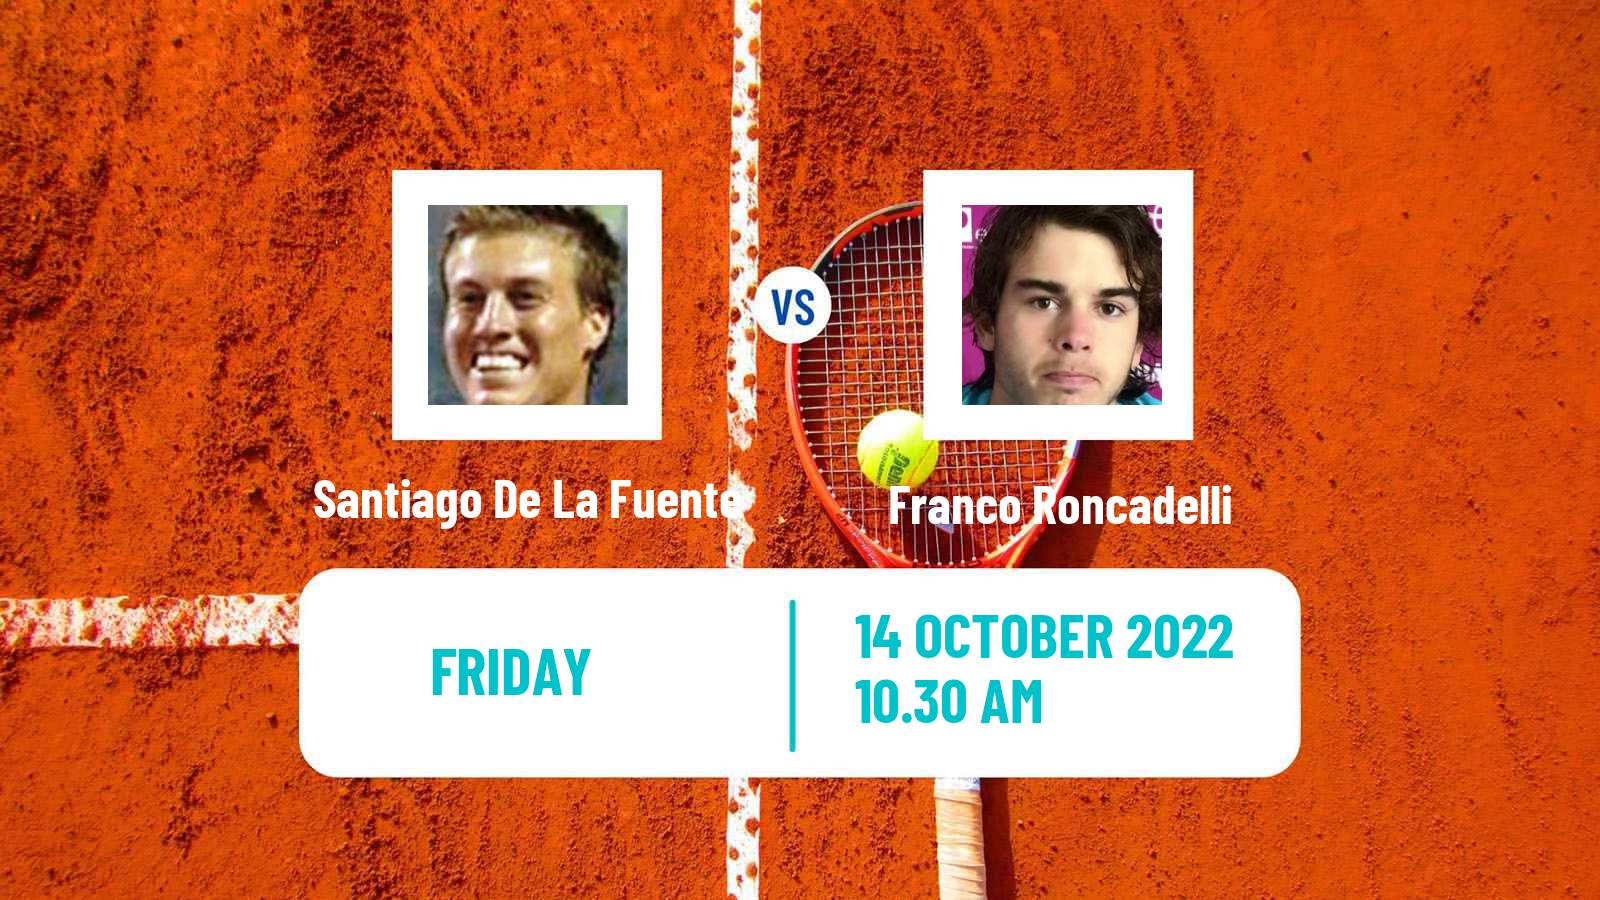 Tennis ITF Tournaments Santiago De La Fuente - Franco Roncadelli